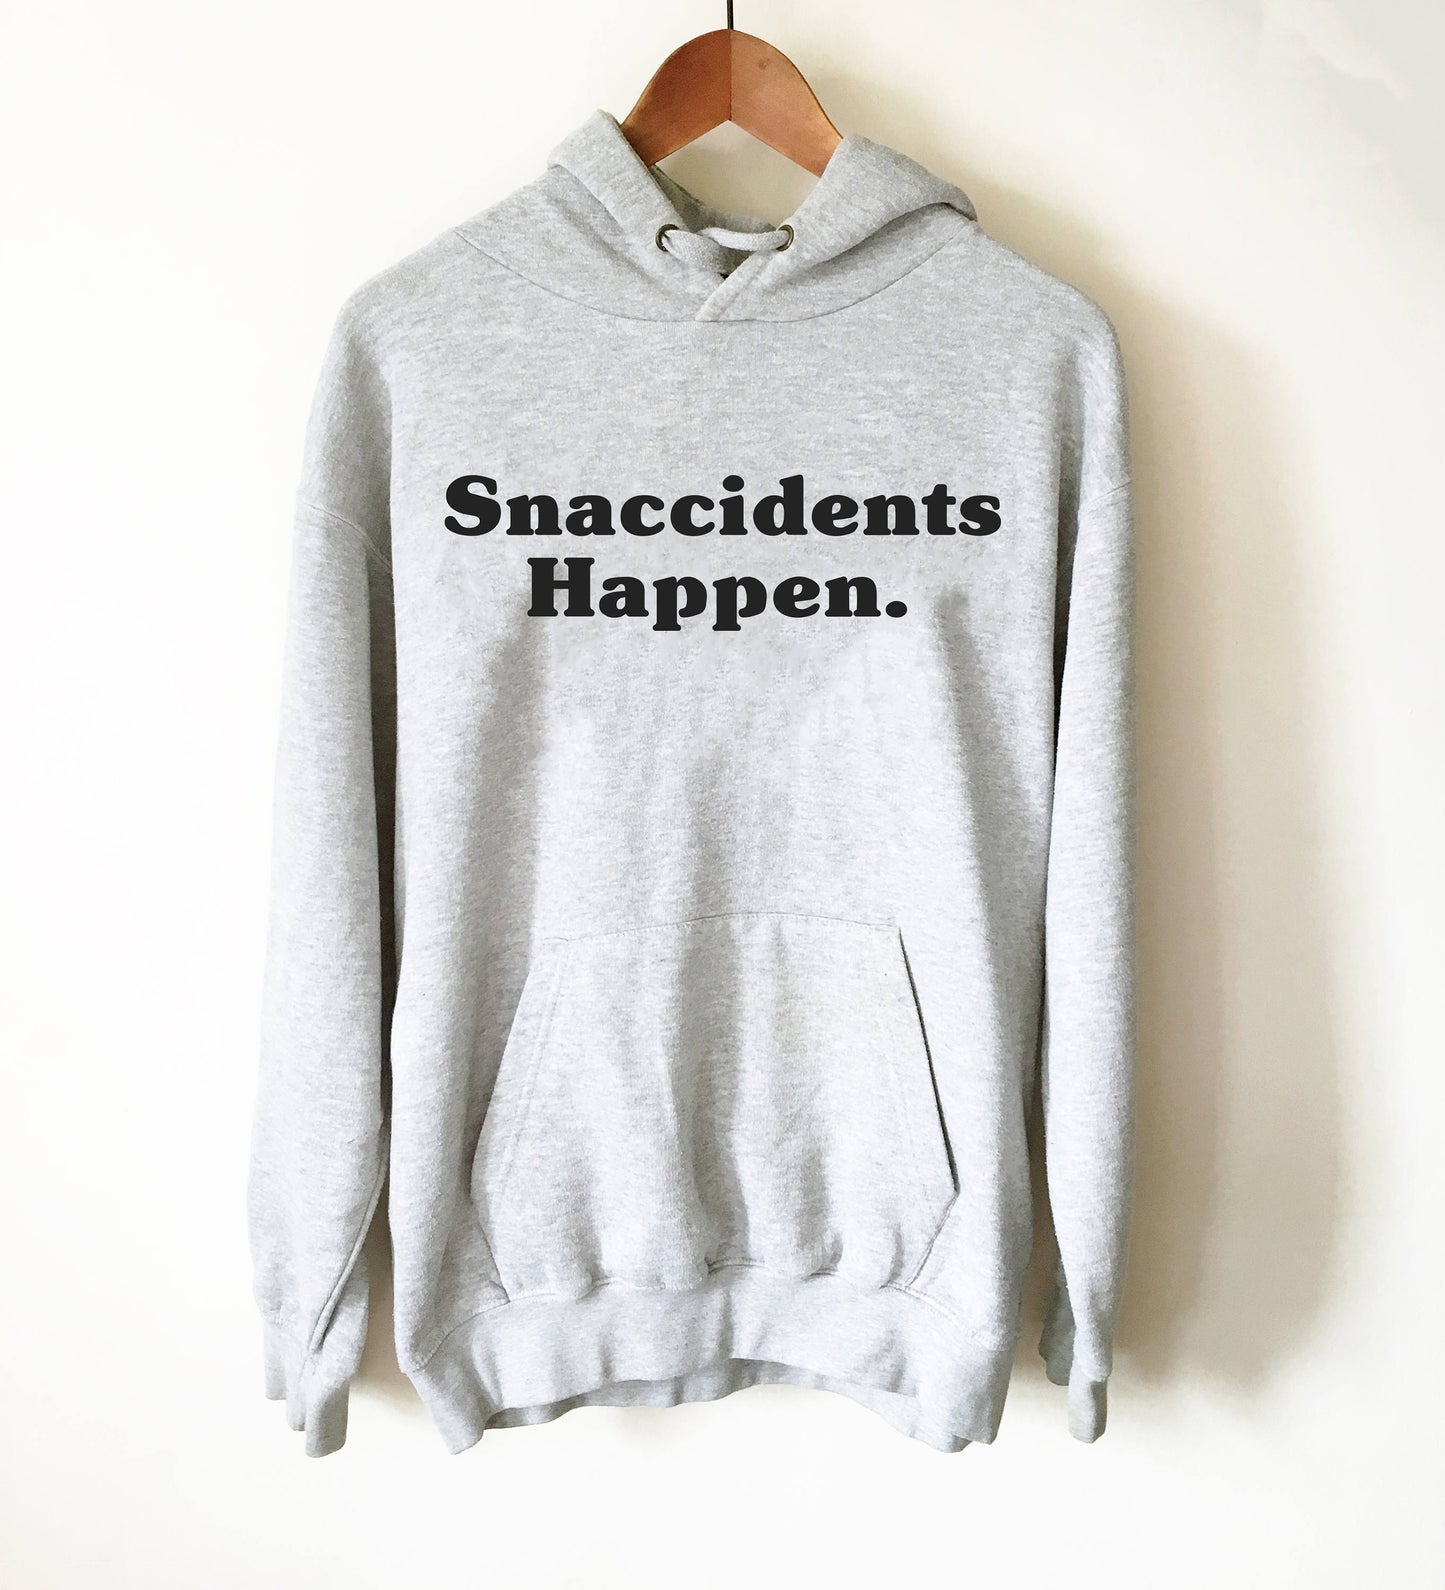 Snaccidents Happen Hoodie - Snacks shirt | Food shirt | Foodie gift | Foodie shirt | Chef shirt | Cute vegan tshirt | Junk food shirt